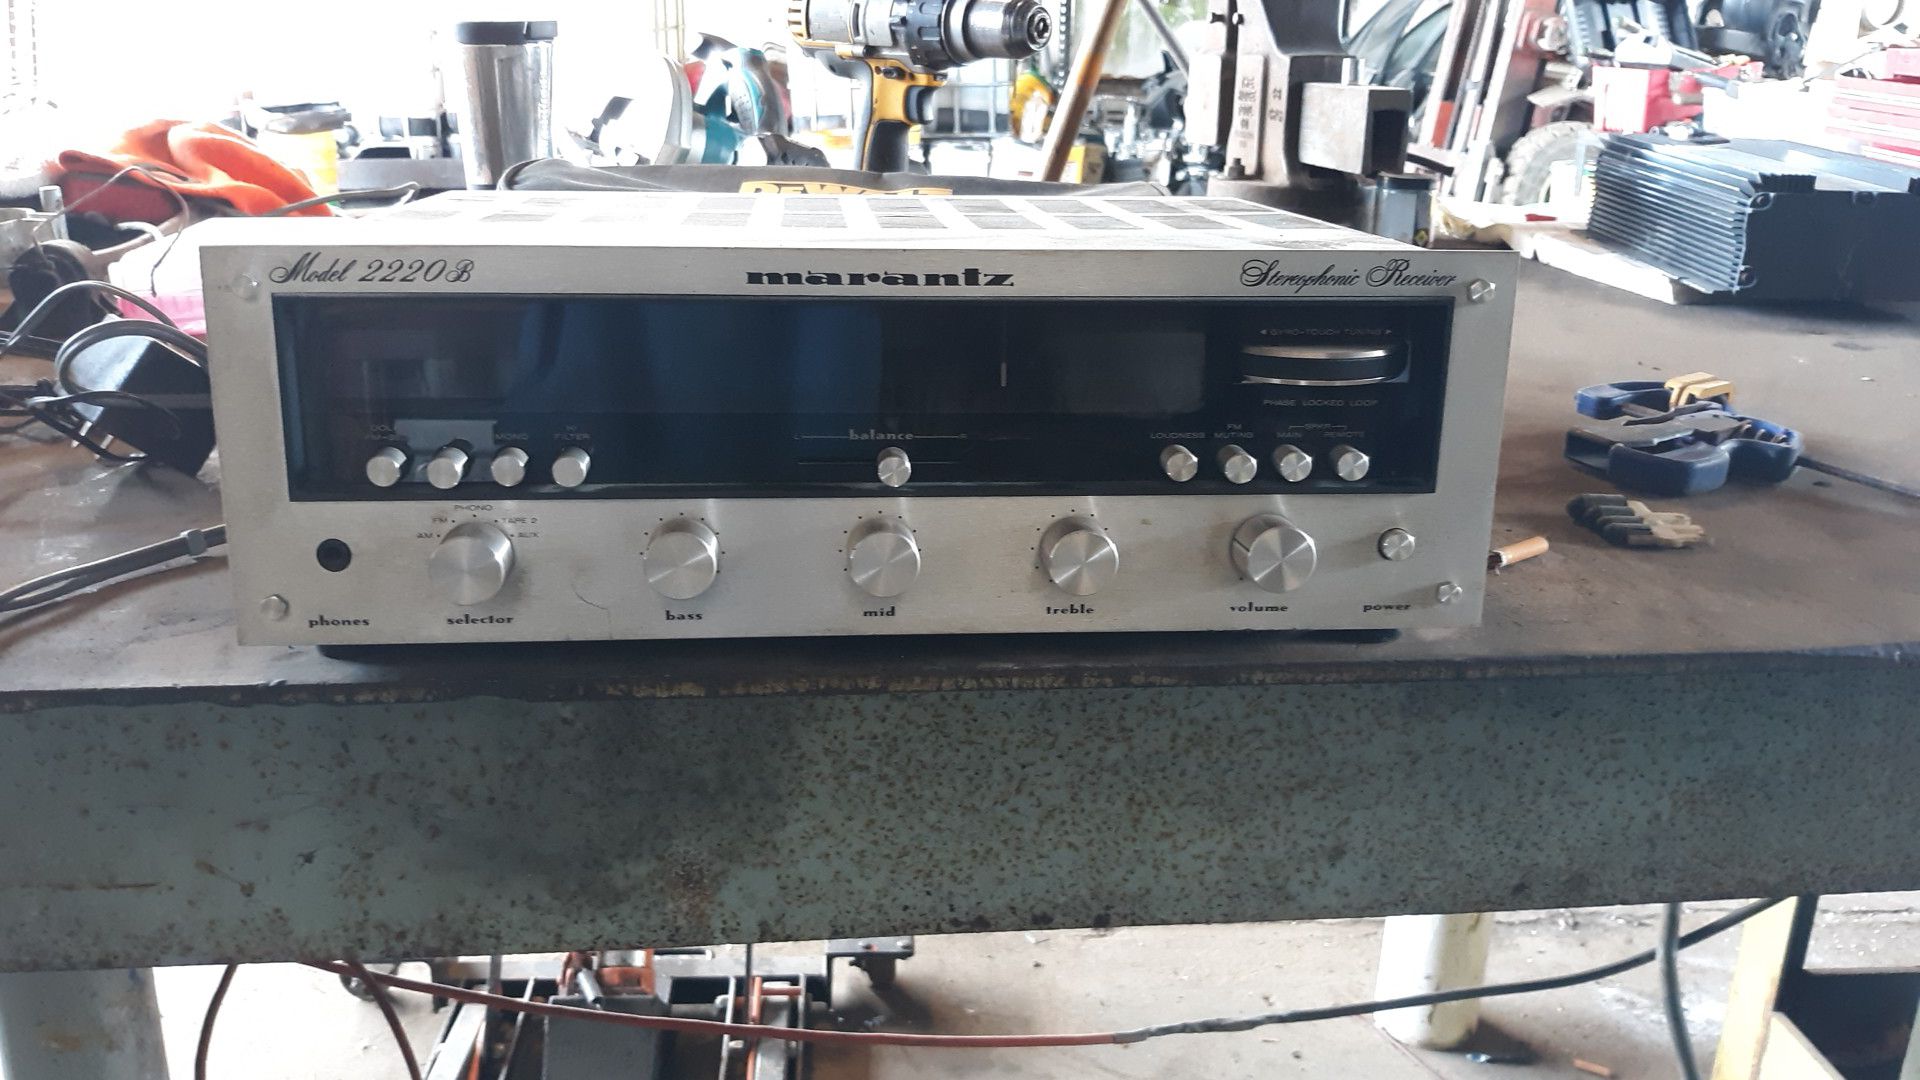 Marantz 2220 stereophonic receiver